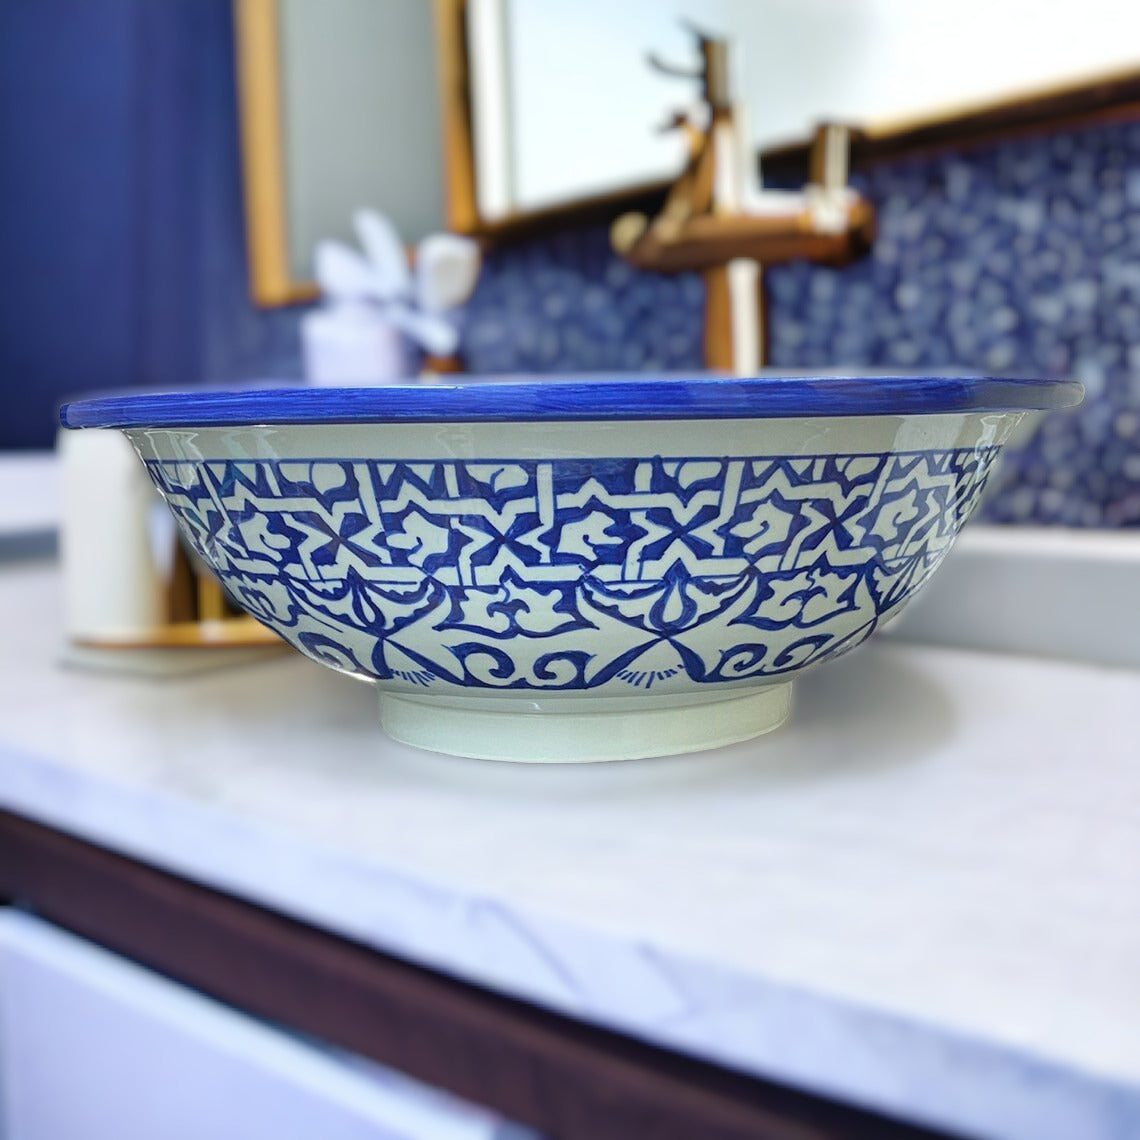 Évier- Vasque Marocaine en céramique pour salle de bain - Lavabo Marocain - Bathroom sink - Moroccan sink bowl #19